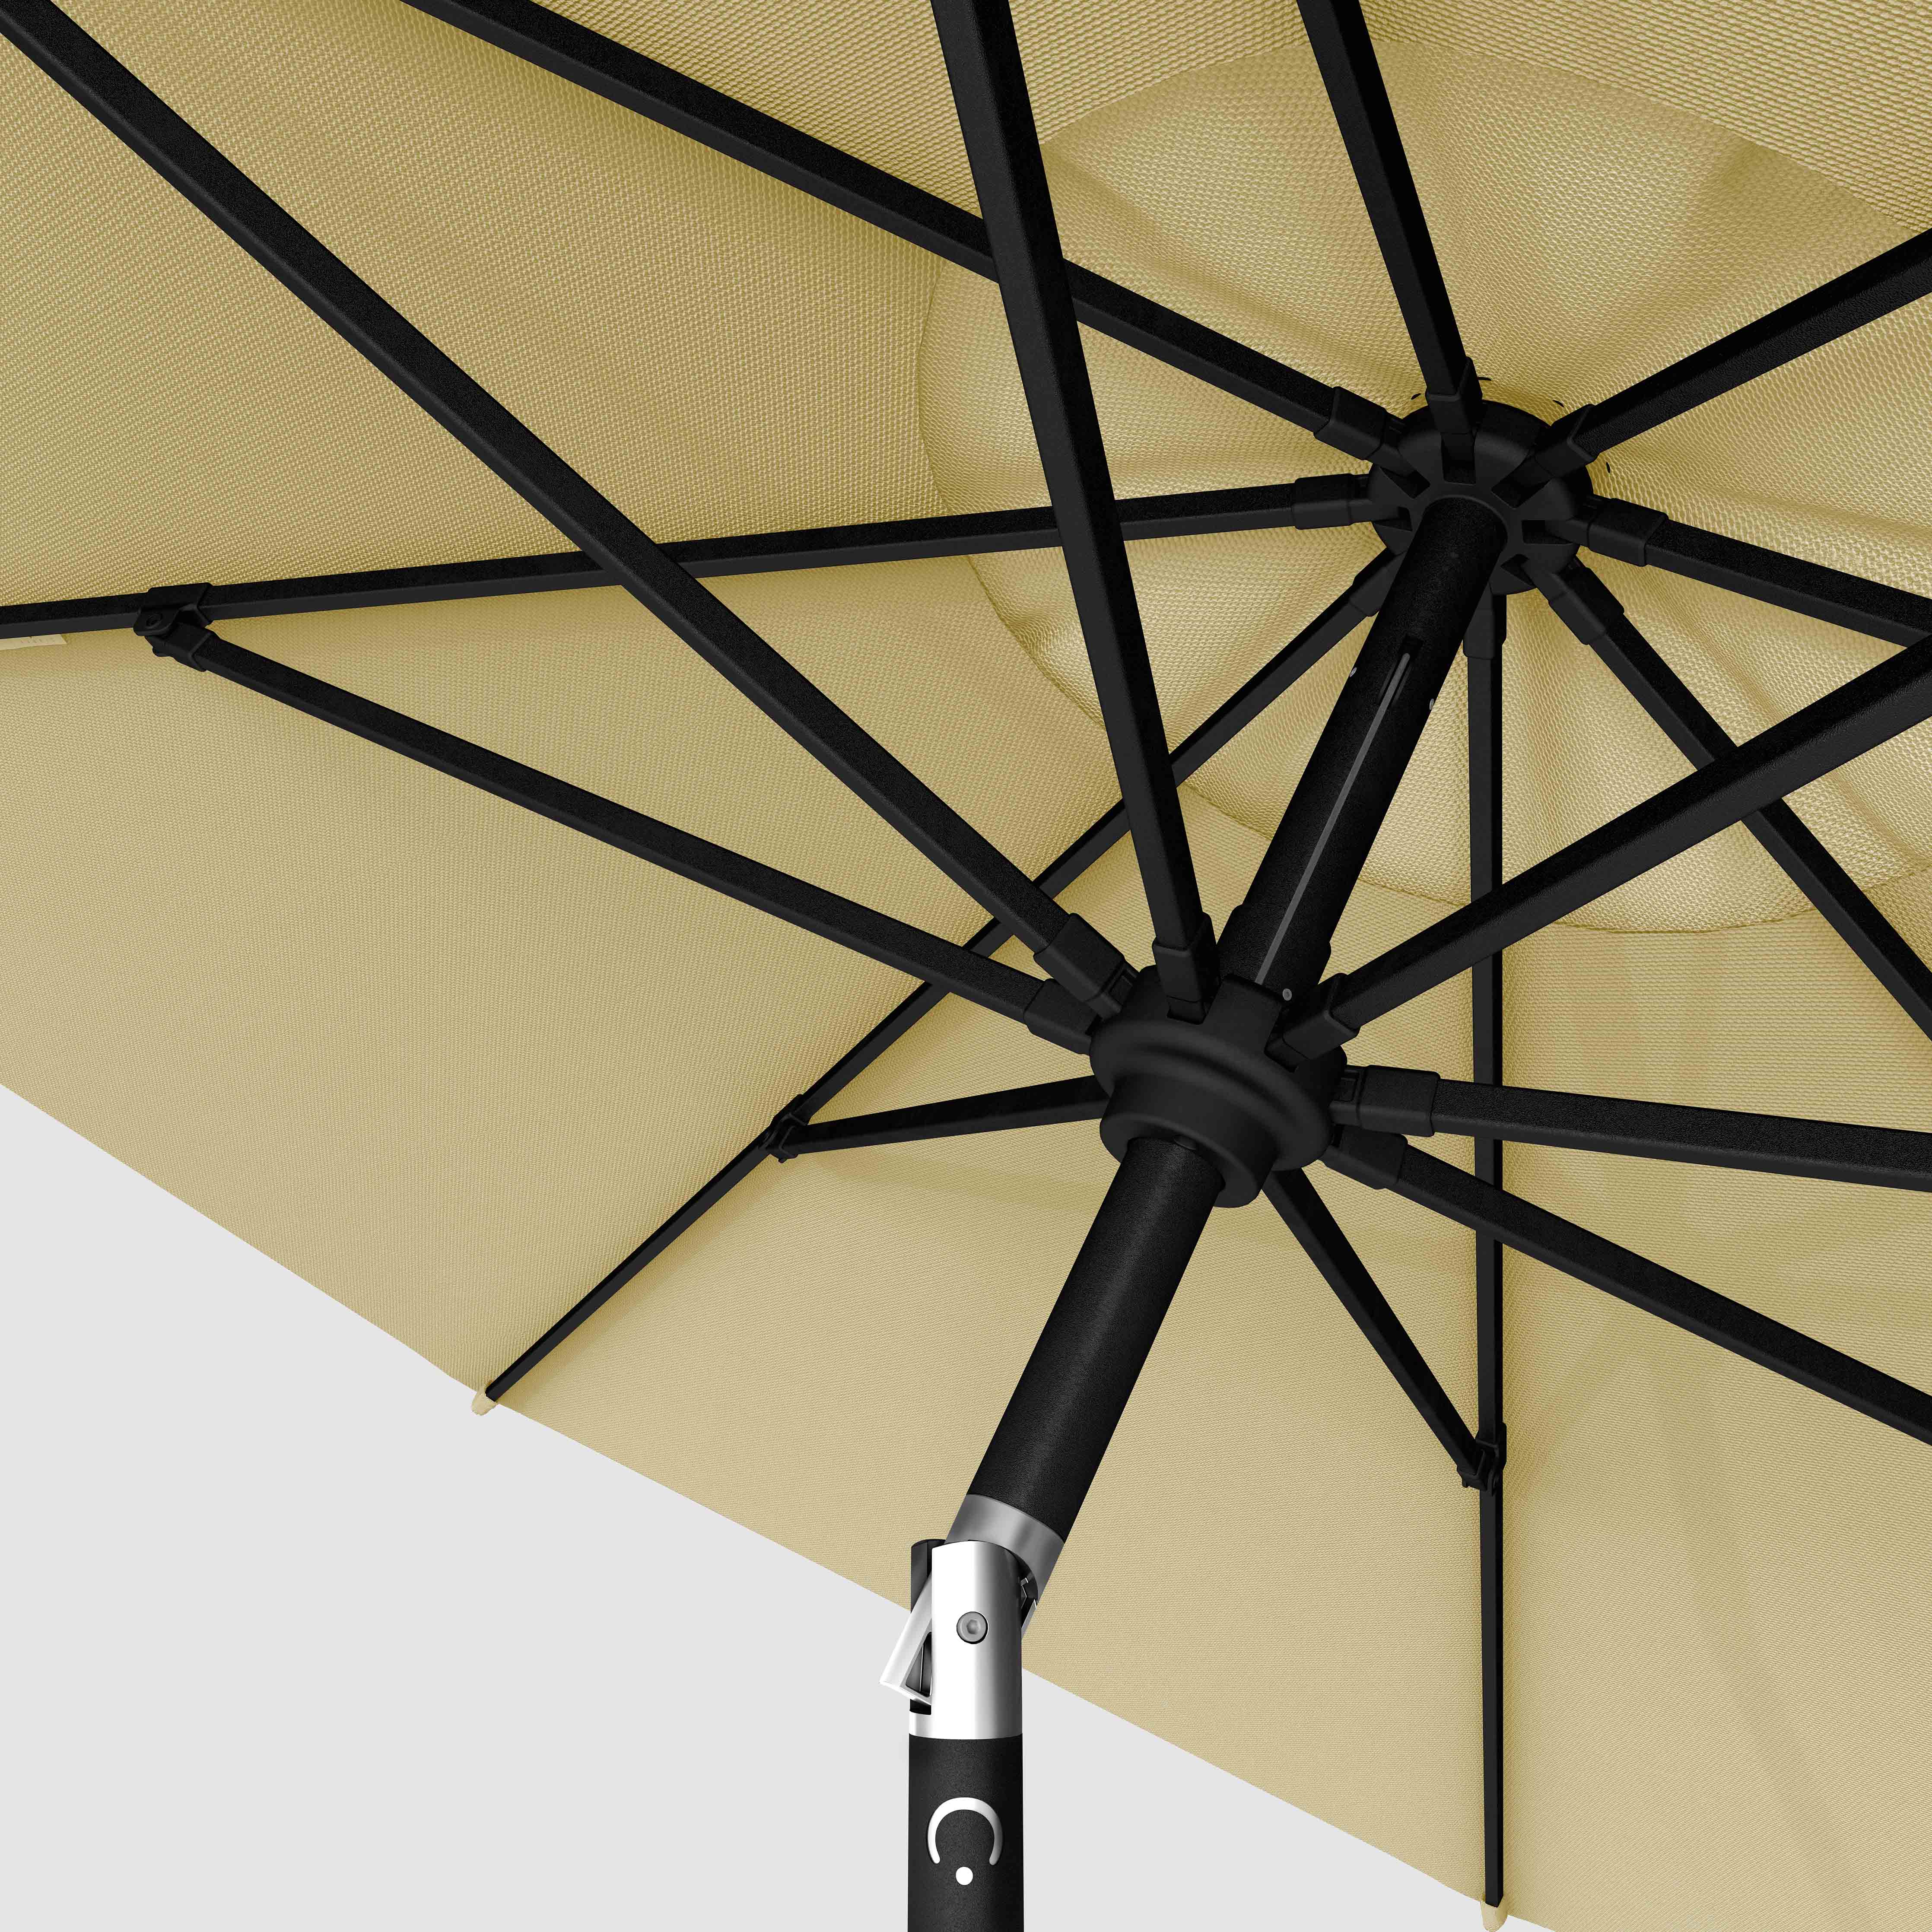 The Lean™ - Sunbrella Antique Beige